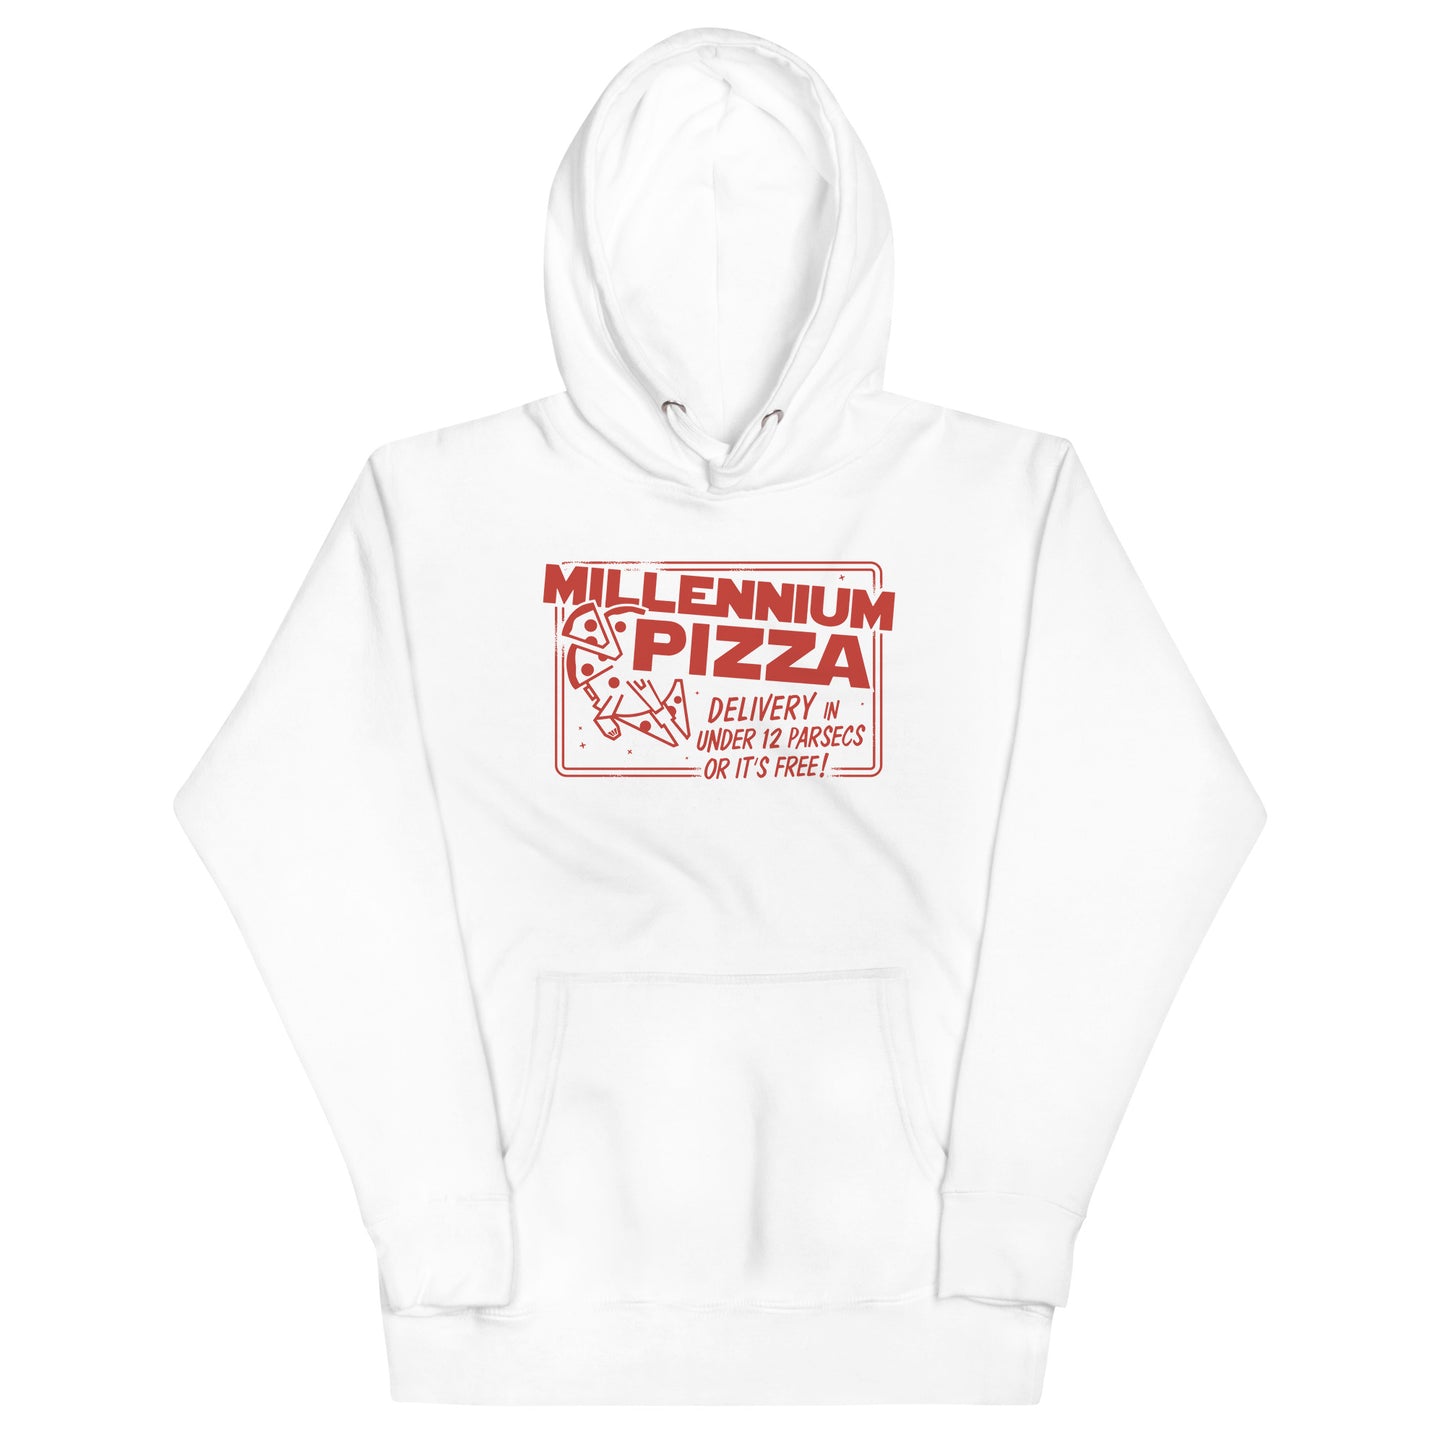 Millennium Pizza Unisex Hoodie